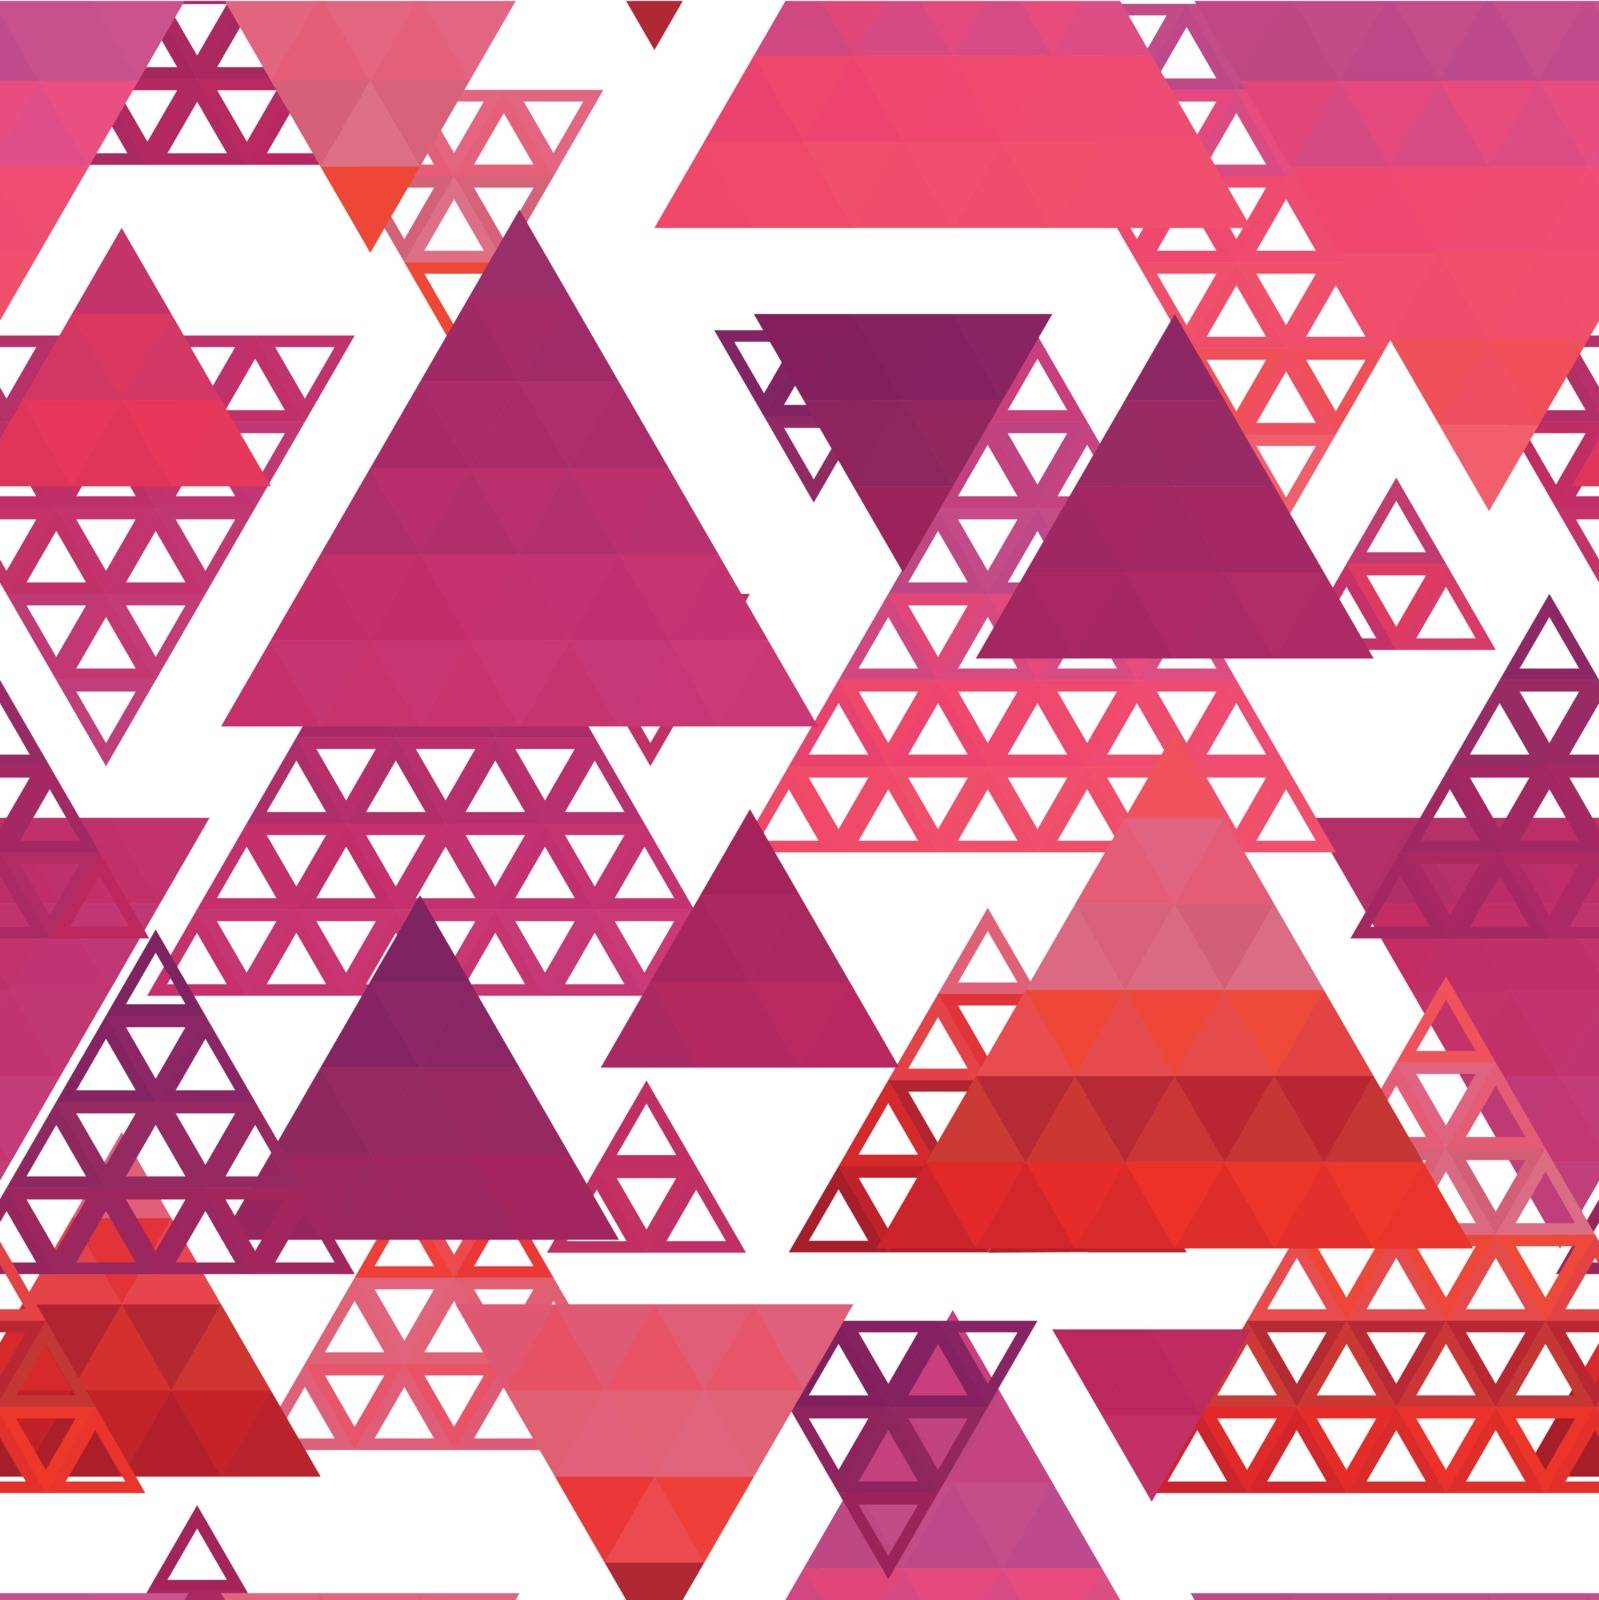 Retro pattern of geometric shapes by LittleCuckoo